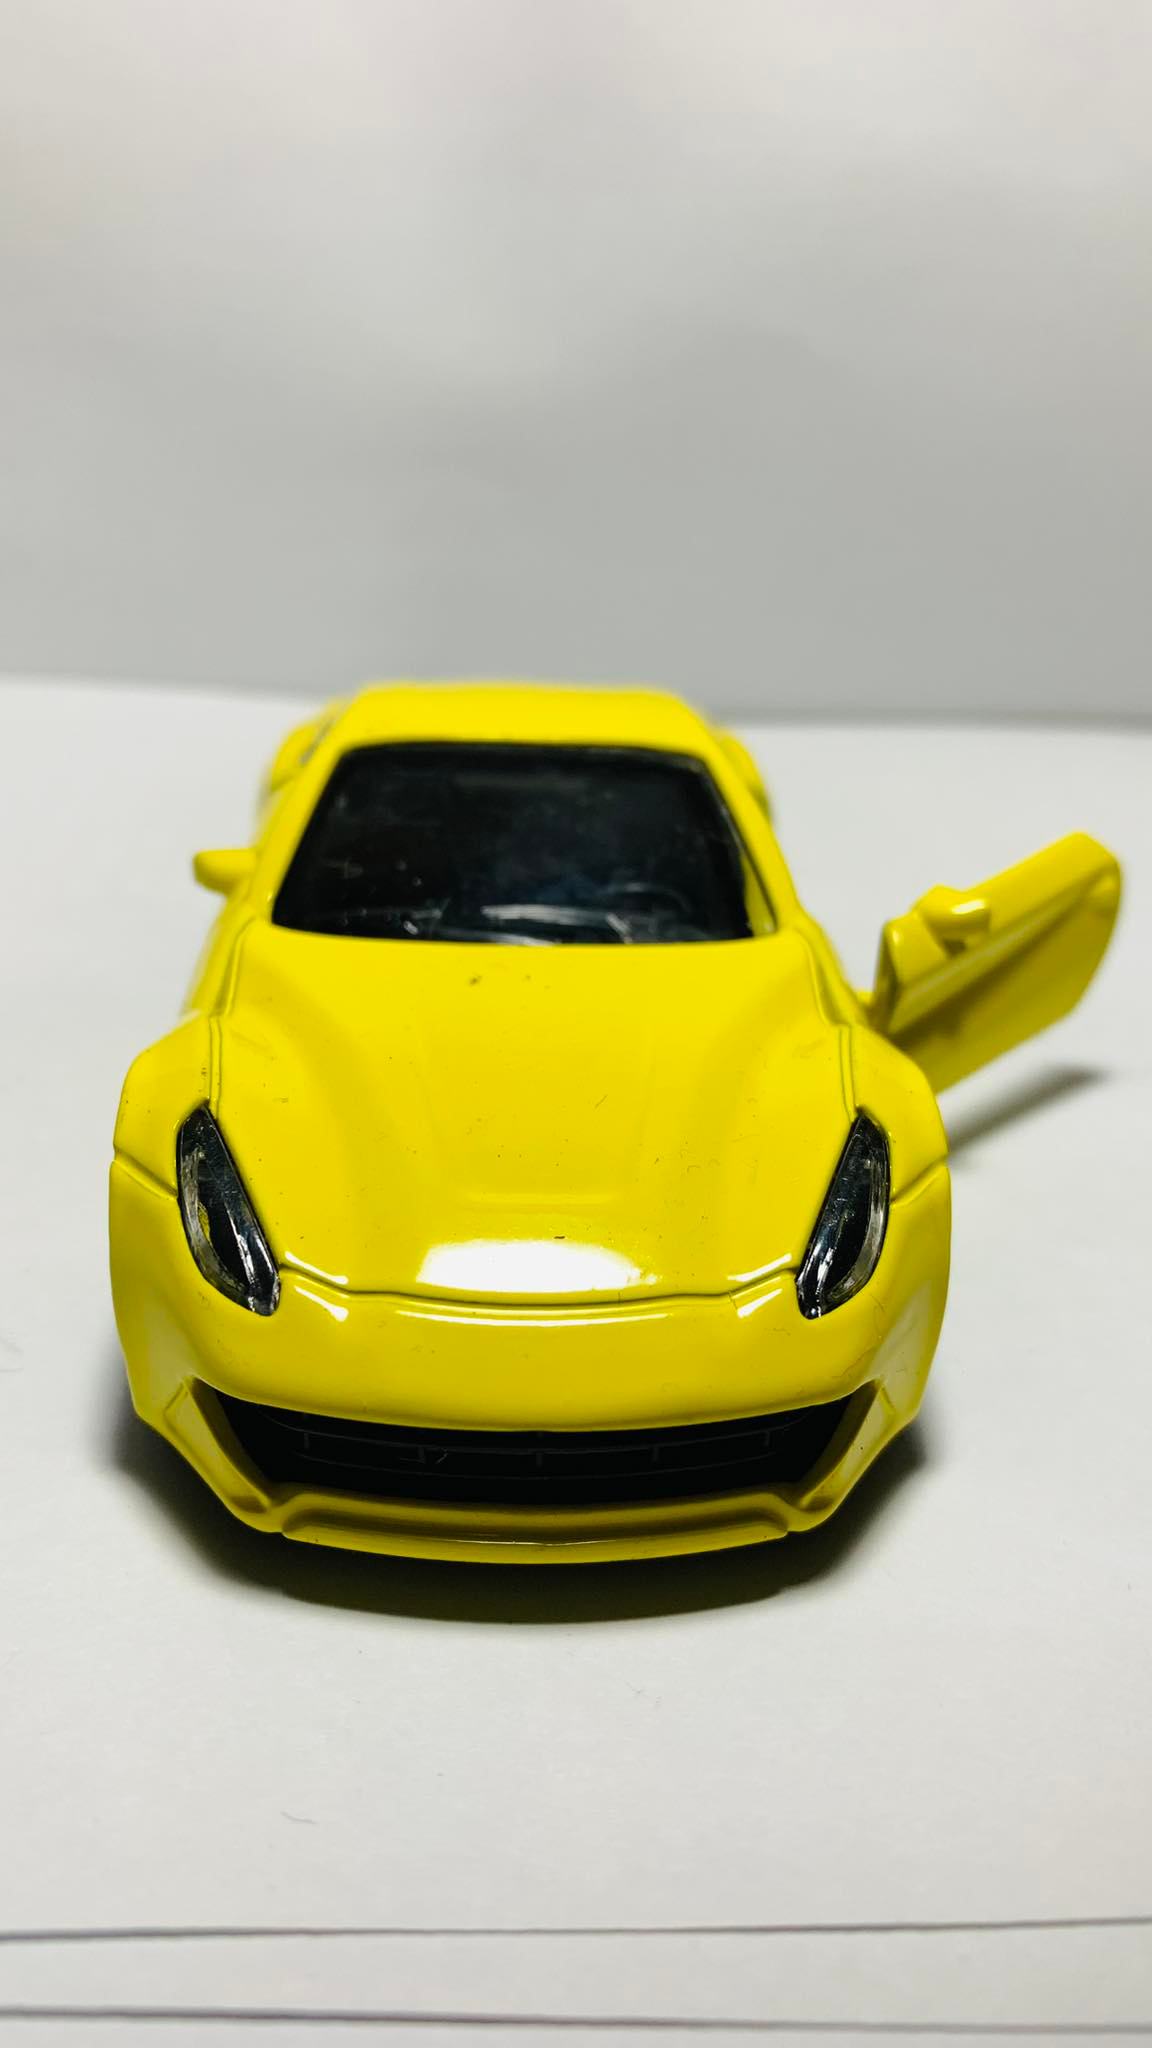 Steel body die cast sports yellow car